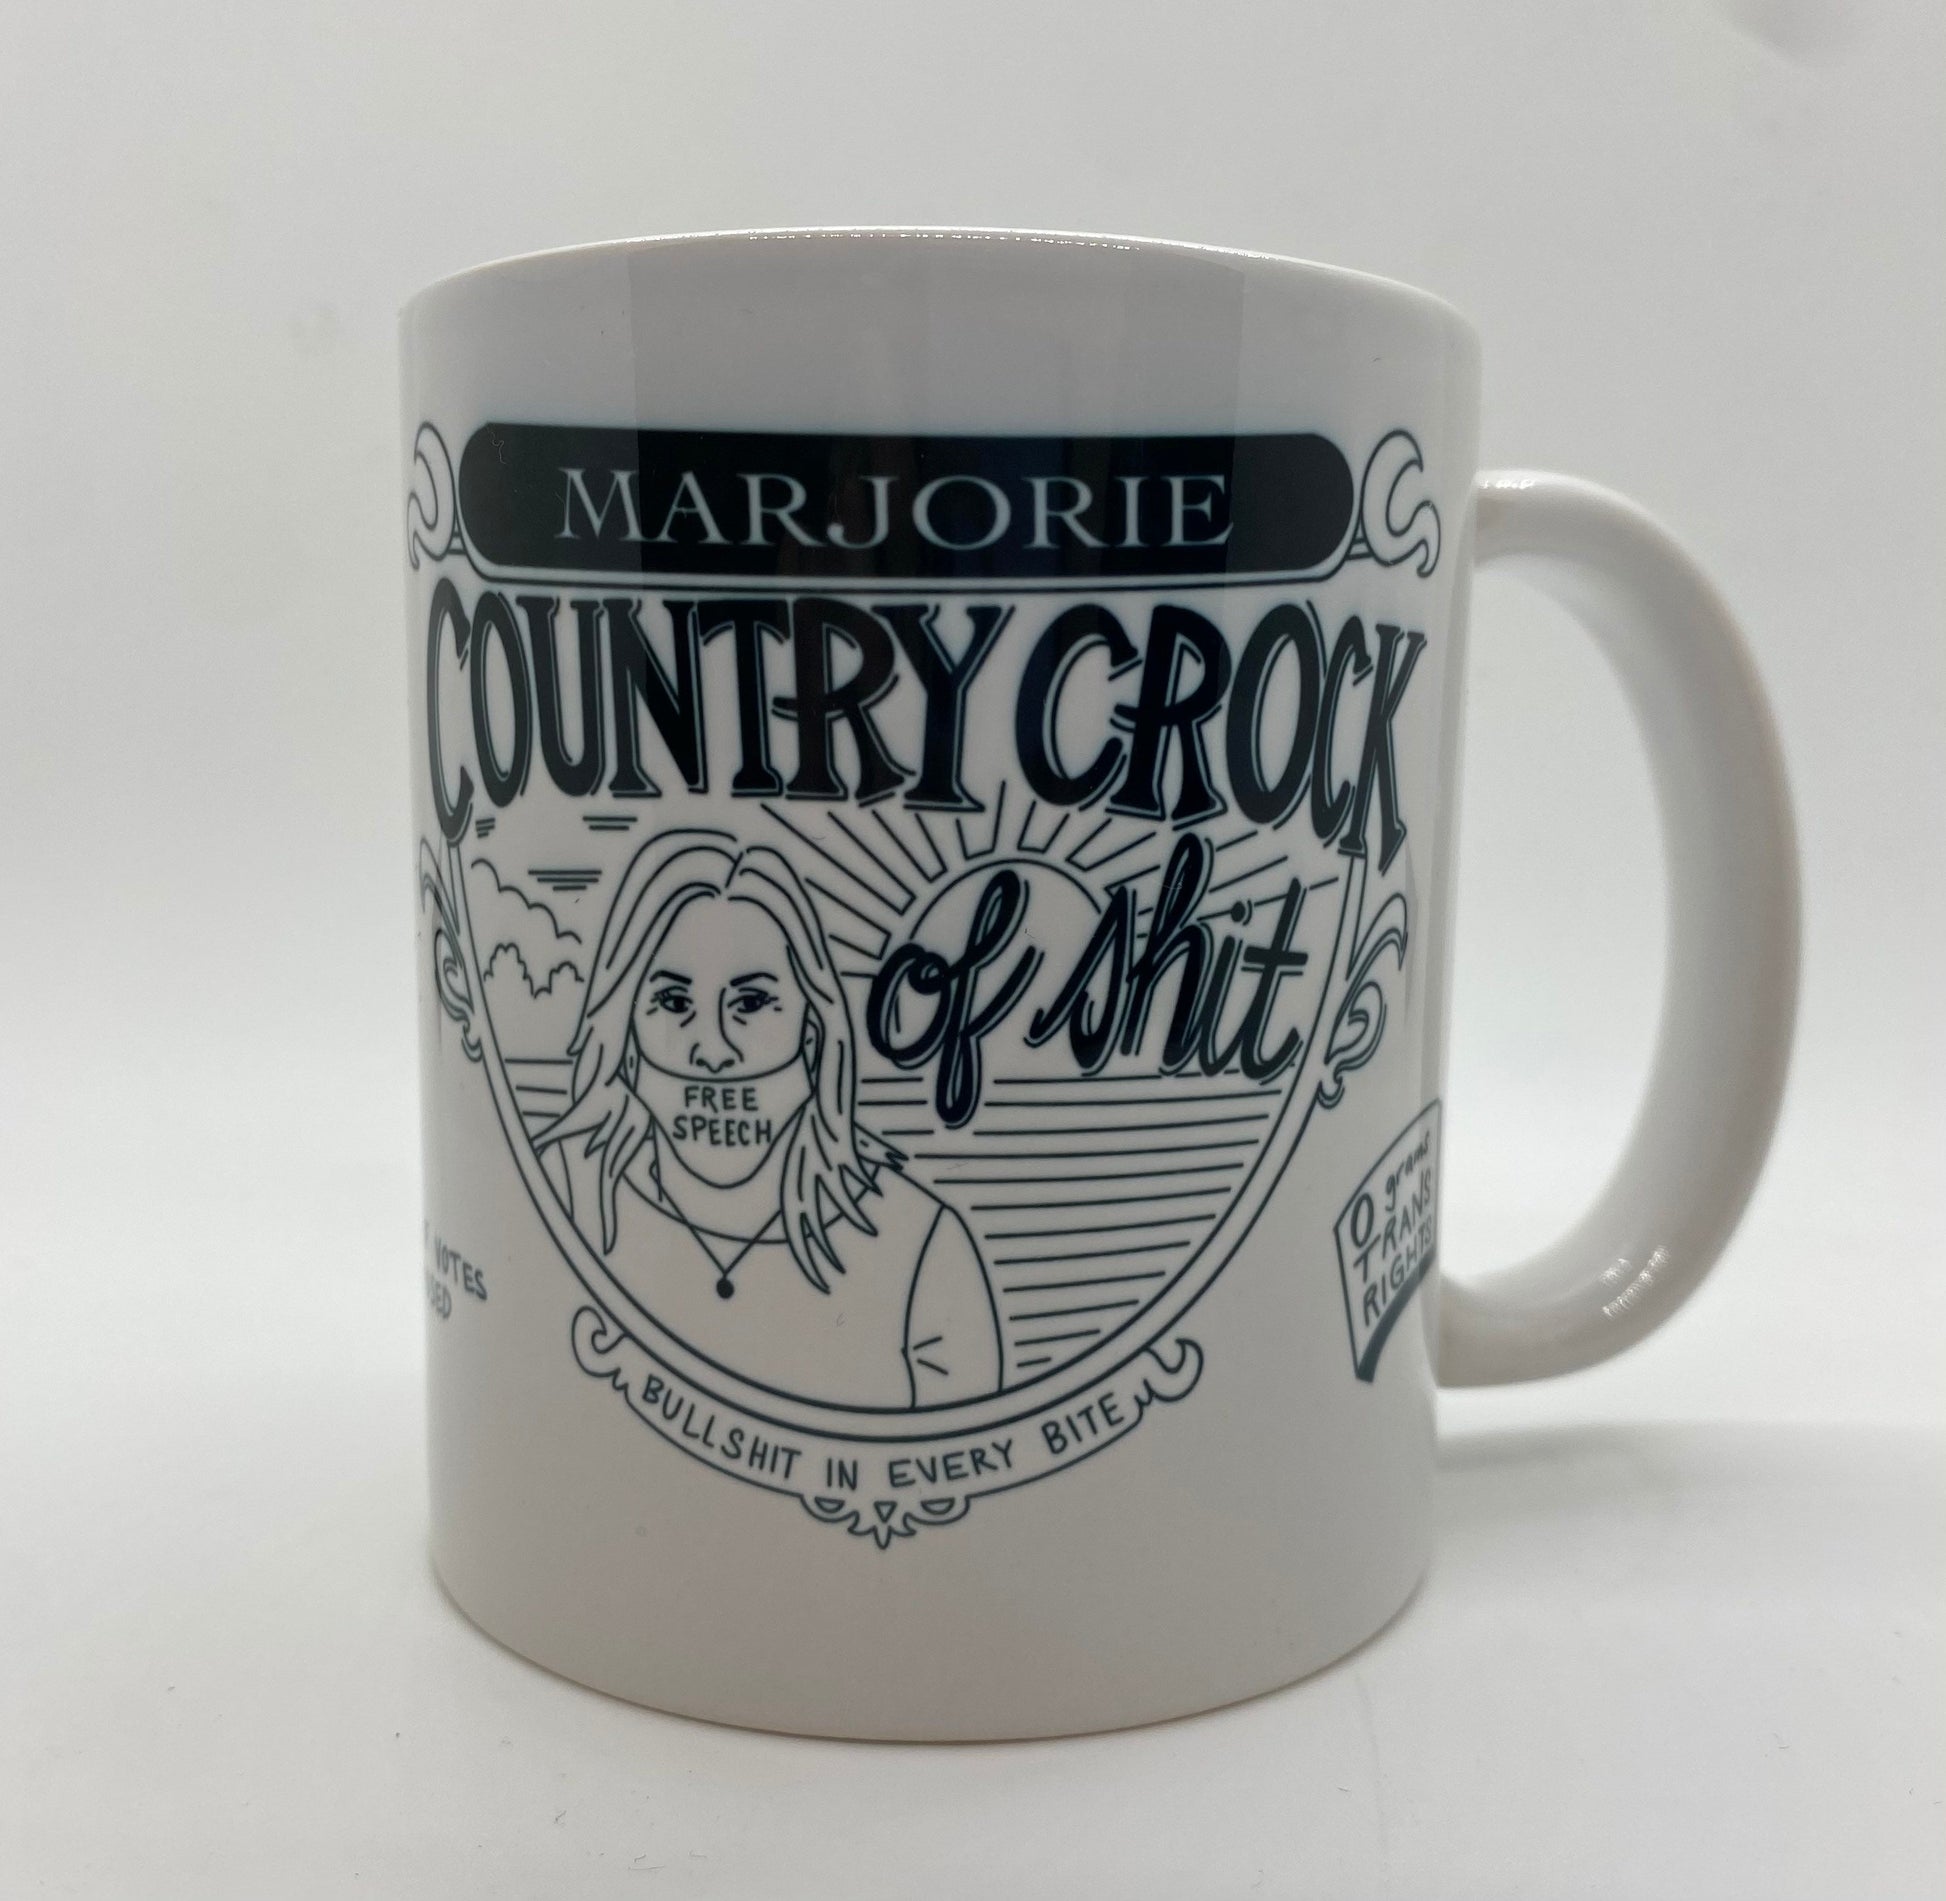 Marjorie MTG Country Crock of Sh!t Mug